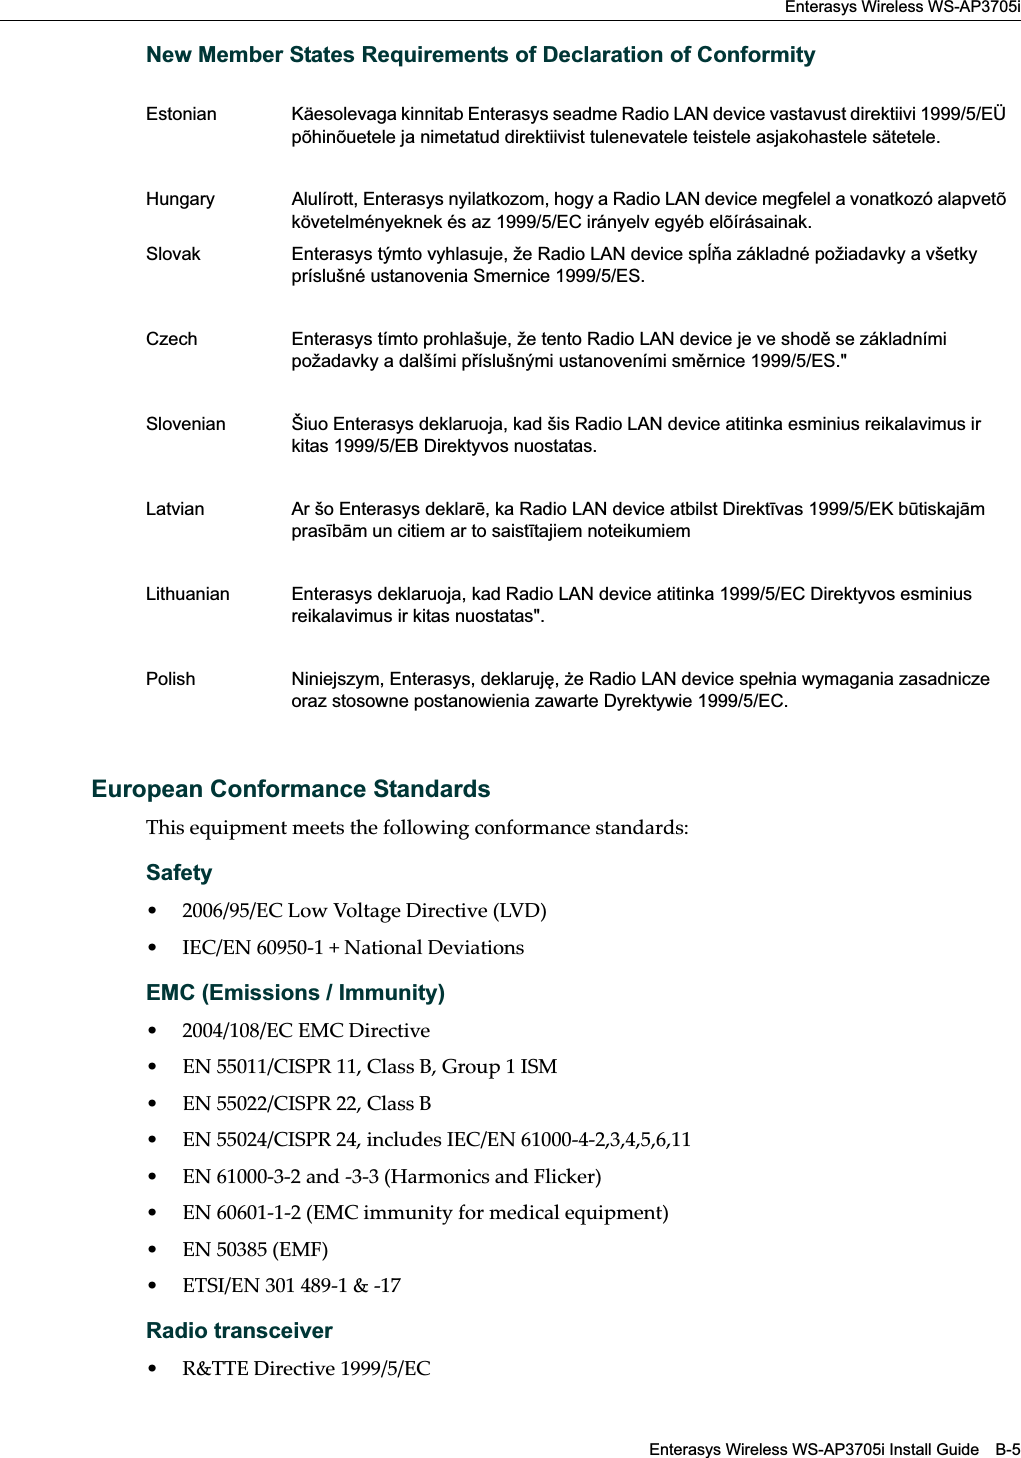 Enterasys Wireless WS-AP3705iEnterasys Wireless WS-AP3705i Install Guide B-5New Member States Requirements of Declaration of ConformityEuropean Conformance StandardsThis equipment meets the following conformance standards:Safety• 2006/95/EC Low Voltage Directive (LVD)• IEC/EN 60950-1 + National DeviationsEMC (Emissions / Immunity)• 2004/108/EC EMC Directive• EN 55011/CISPR 11, Class B, Group 1 ISM• EN 55022/CISPR 22, Class B• EN 55024/CISPR 24, includes IEC/EN 61000-4-2,3,4,5,6,11• EN 61000-3-2 and -3-3 (Harmonics and Flicker)• EN 60601-1-2 (EMC immunity for medical equipment)• EN 50385 (EMF)• ETSI/EN 301 489-1 &amp; -17 Radio transceiver • R&amp;TTE Directive 1999/5/ECEstonian Käesolevaga kinnitab Enterasys seadme Radio LAN device vastavust direktiivi 1999/5/EÜ põhinõuetele ja nimetatud direktiivist tulenevatele teistele asjakohastele sätetele.Hungary Alulírott, Enterasys nyilatkozom, hogy a Radio LAN device megfelel a vonatkozó alapvetõ követelményeknek és az 1999/5/EC irányelv egyéb elõírásainak.Slovak Enterasys týmto vyhlasuje, že Radio LAN device spa základné požiadavky a všetky príslušné ustanovenia Smernice 1999/5/ES.Czech Enterasys tímto prohlašuje, že tento Radio LAN device je ve shod se základními požadavky a dalšími píslušnými ustanoveními smrnice 1999/5/ES.&quot;Slovenian Šiuo Enterasys deklaruoja, kad šis Radio LAN device atitinka esminius reikalavimus ir kitas 1999/5/EB Direktyvos nuostatas.Latvian Ar šo Enterasys deklar, ka Radio LAN device atbilst Direktvas 1999/5/EK btiskajm prasbm un citiem ar to saisttajiem noteikumiemLithuanian Enterasys deklaruoja, kad Radio LAN device atitinka 1999/5/EC Direktyvos esminius reikalavimus ir kitas nuostatas&quot;.Polish Niniejszym, Enterasys, deklaruj, e Radio LAN device spe#nia wymagania zasadnicze oraz stosowne postanowienia zawarte Dyrektywie 1999/5/EC.Draft